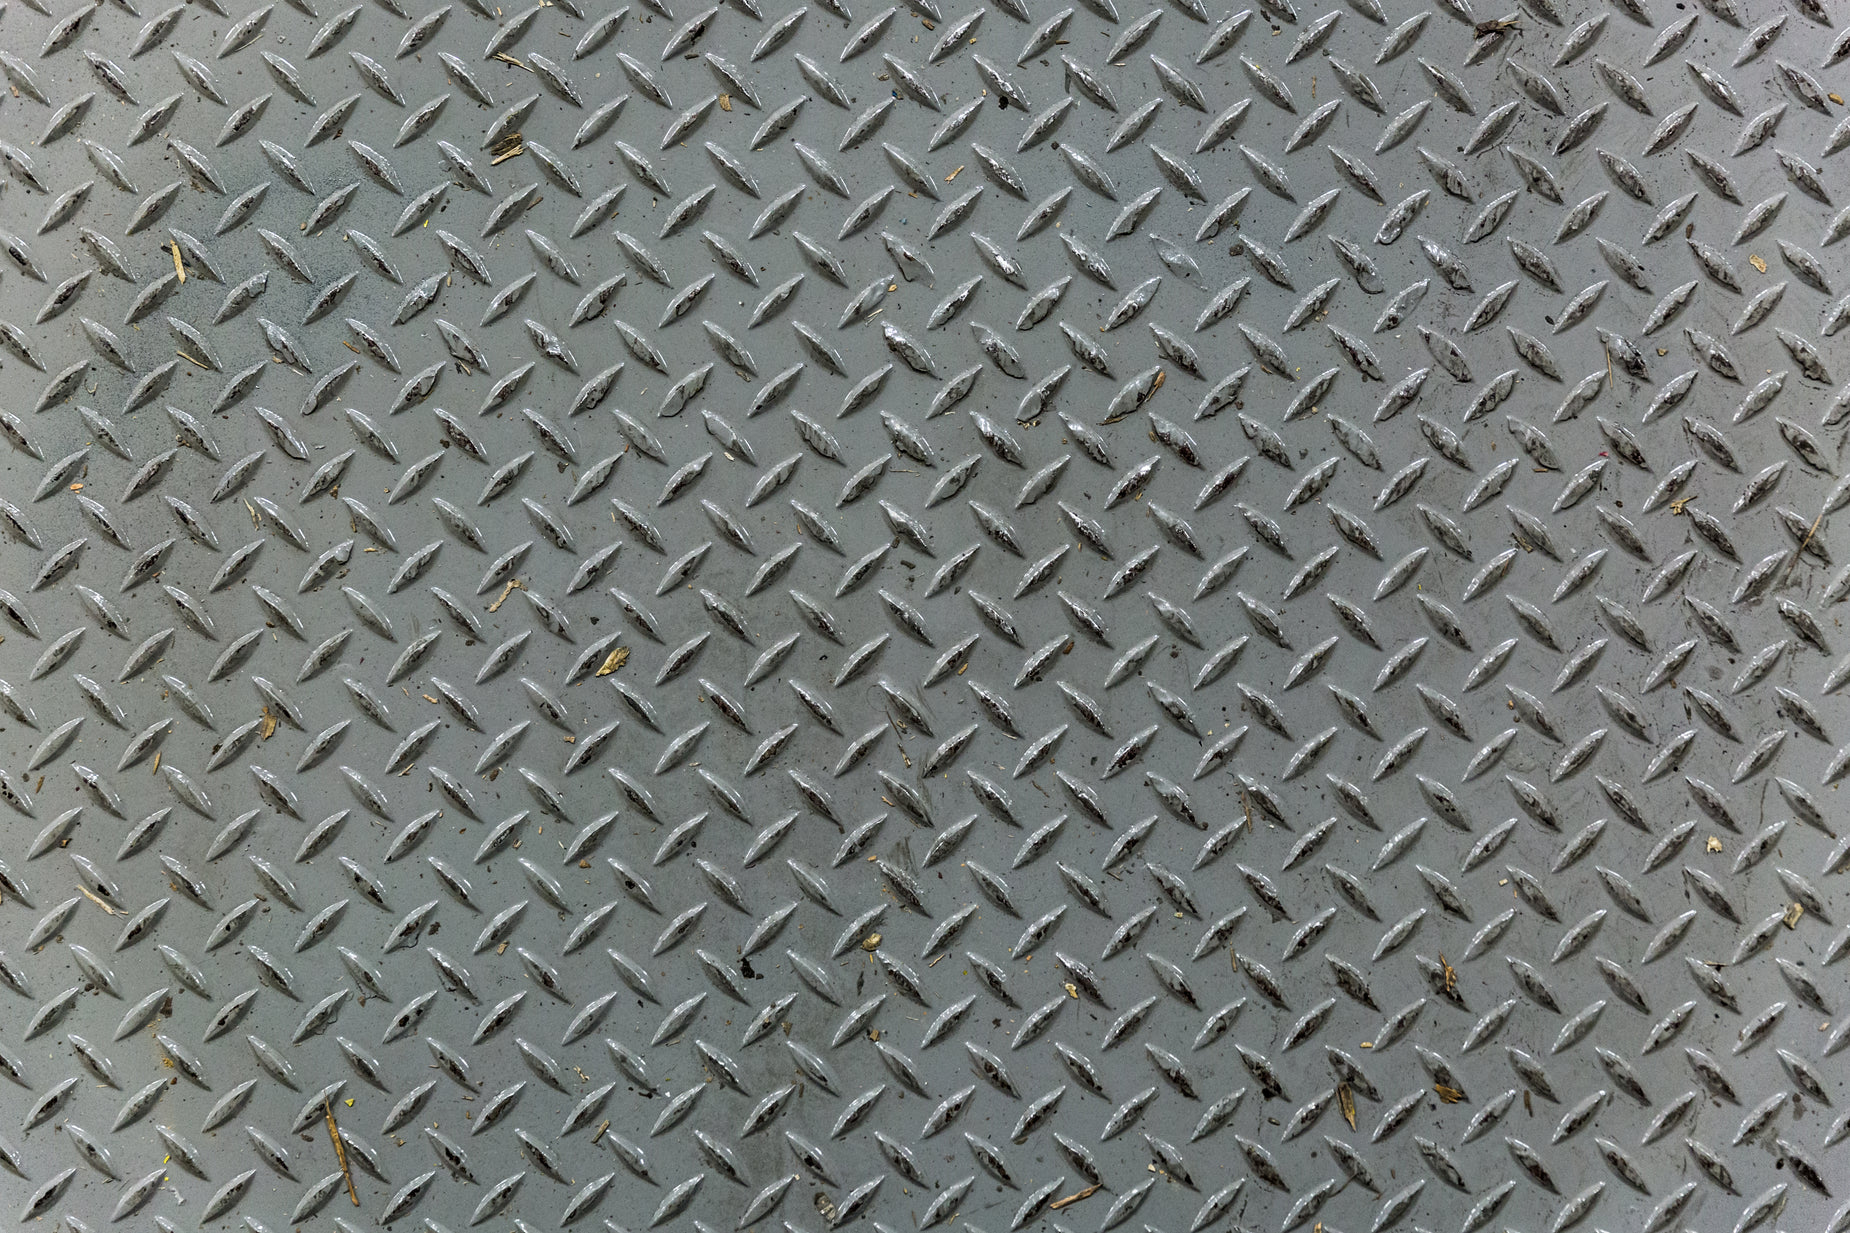 a closeup of the bottom of a diamond plate